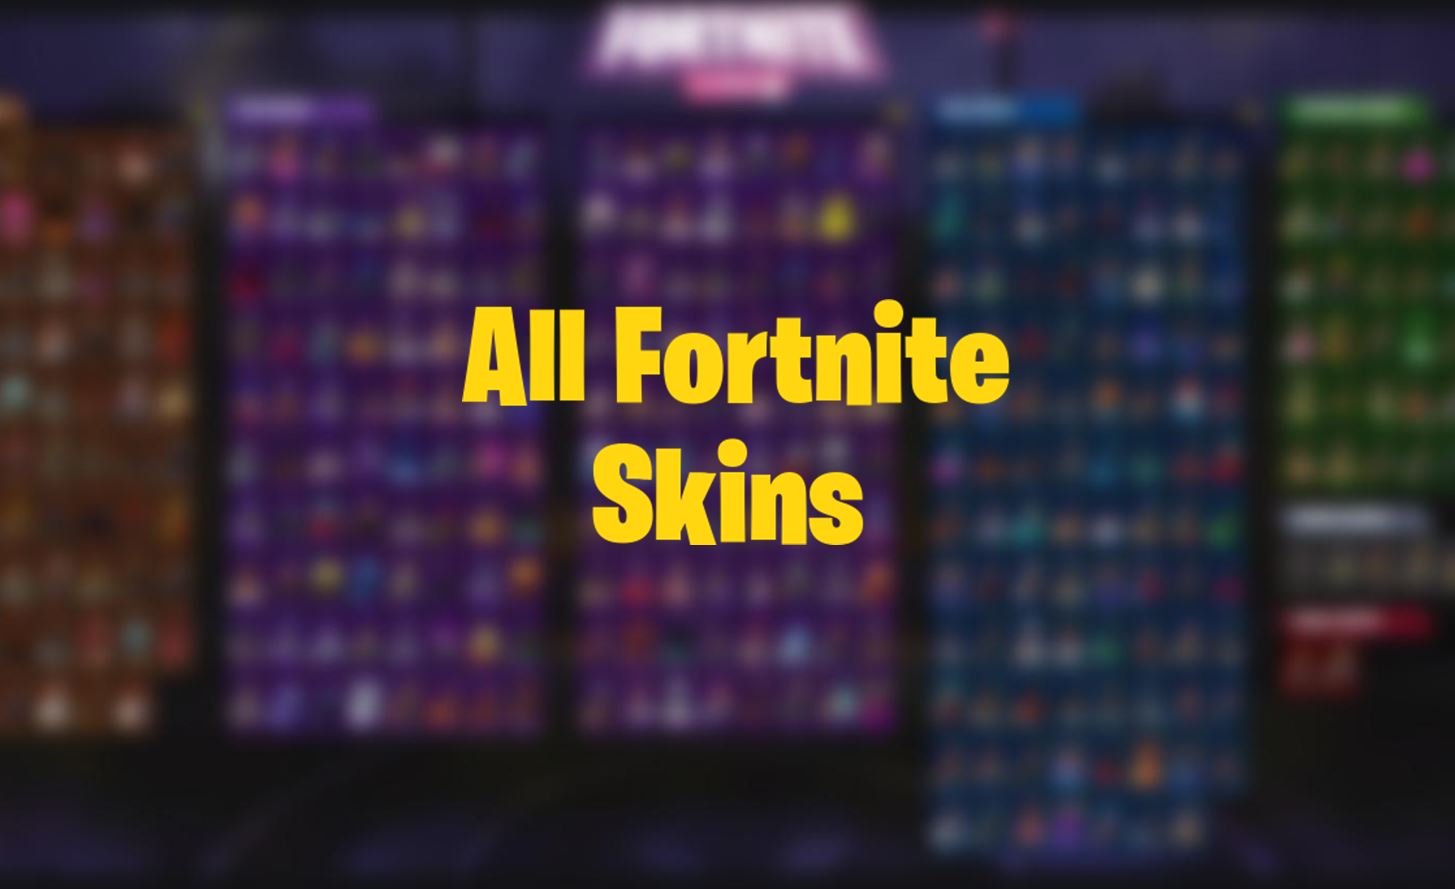 All Fortnite skins A-Z